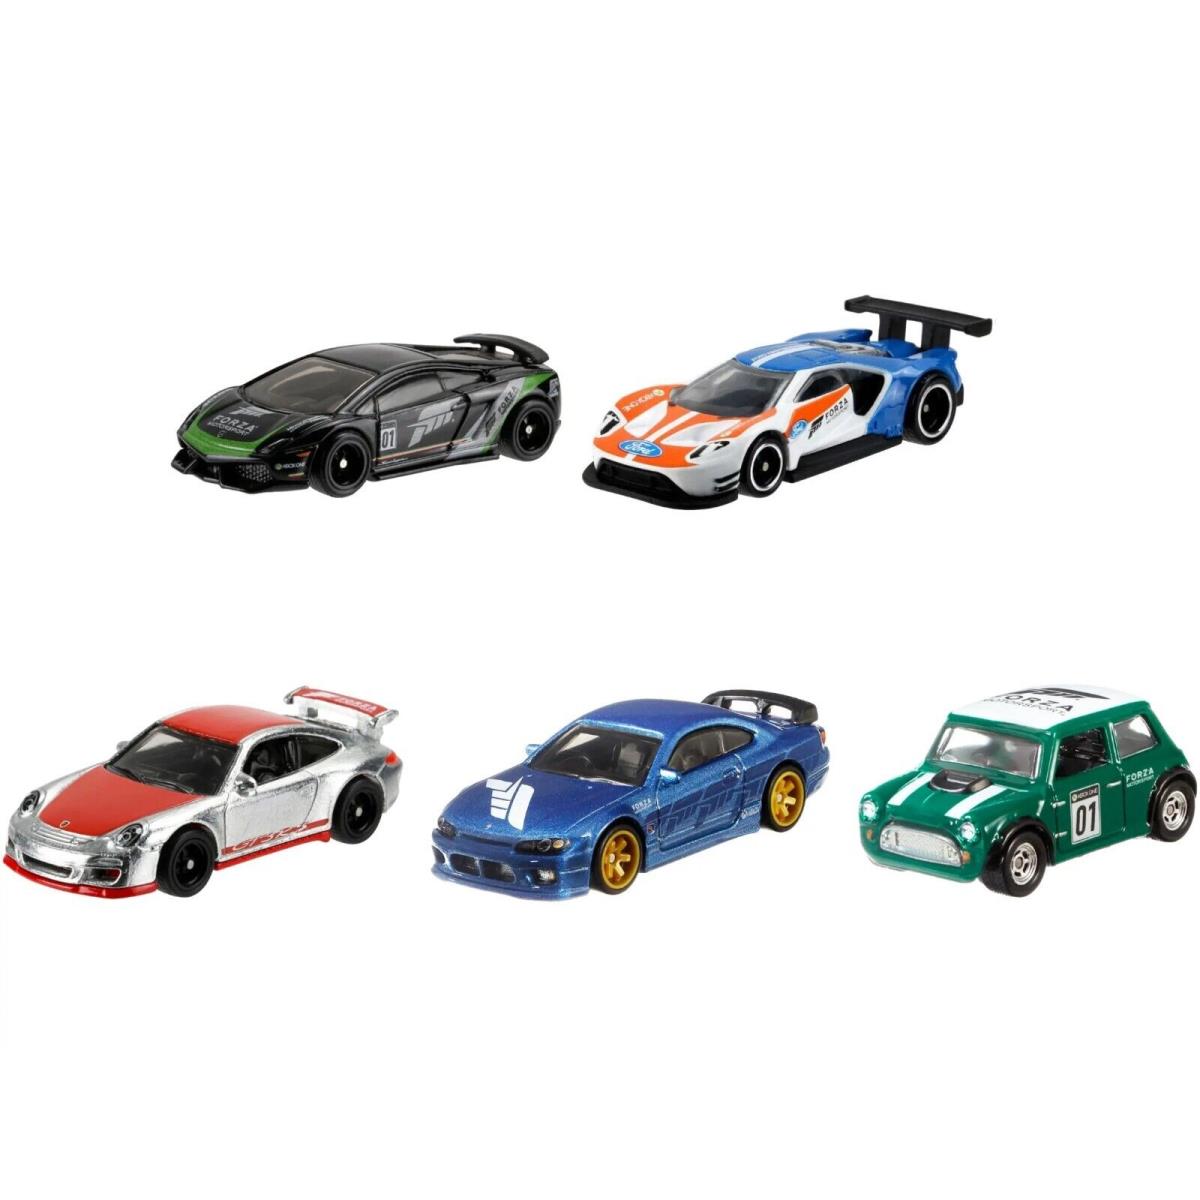 Hot Wheels Premium Forza Motorsport 1:64 Scale Die-cast Car Model Toys Set of 5